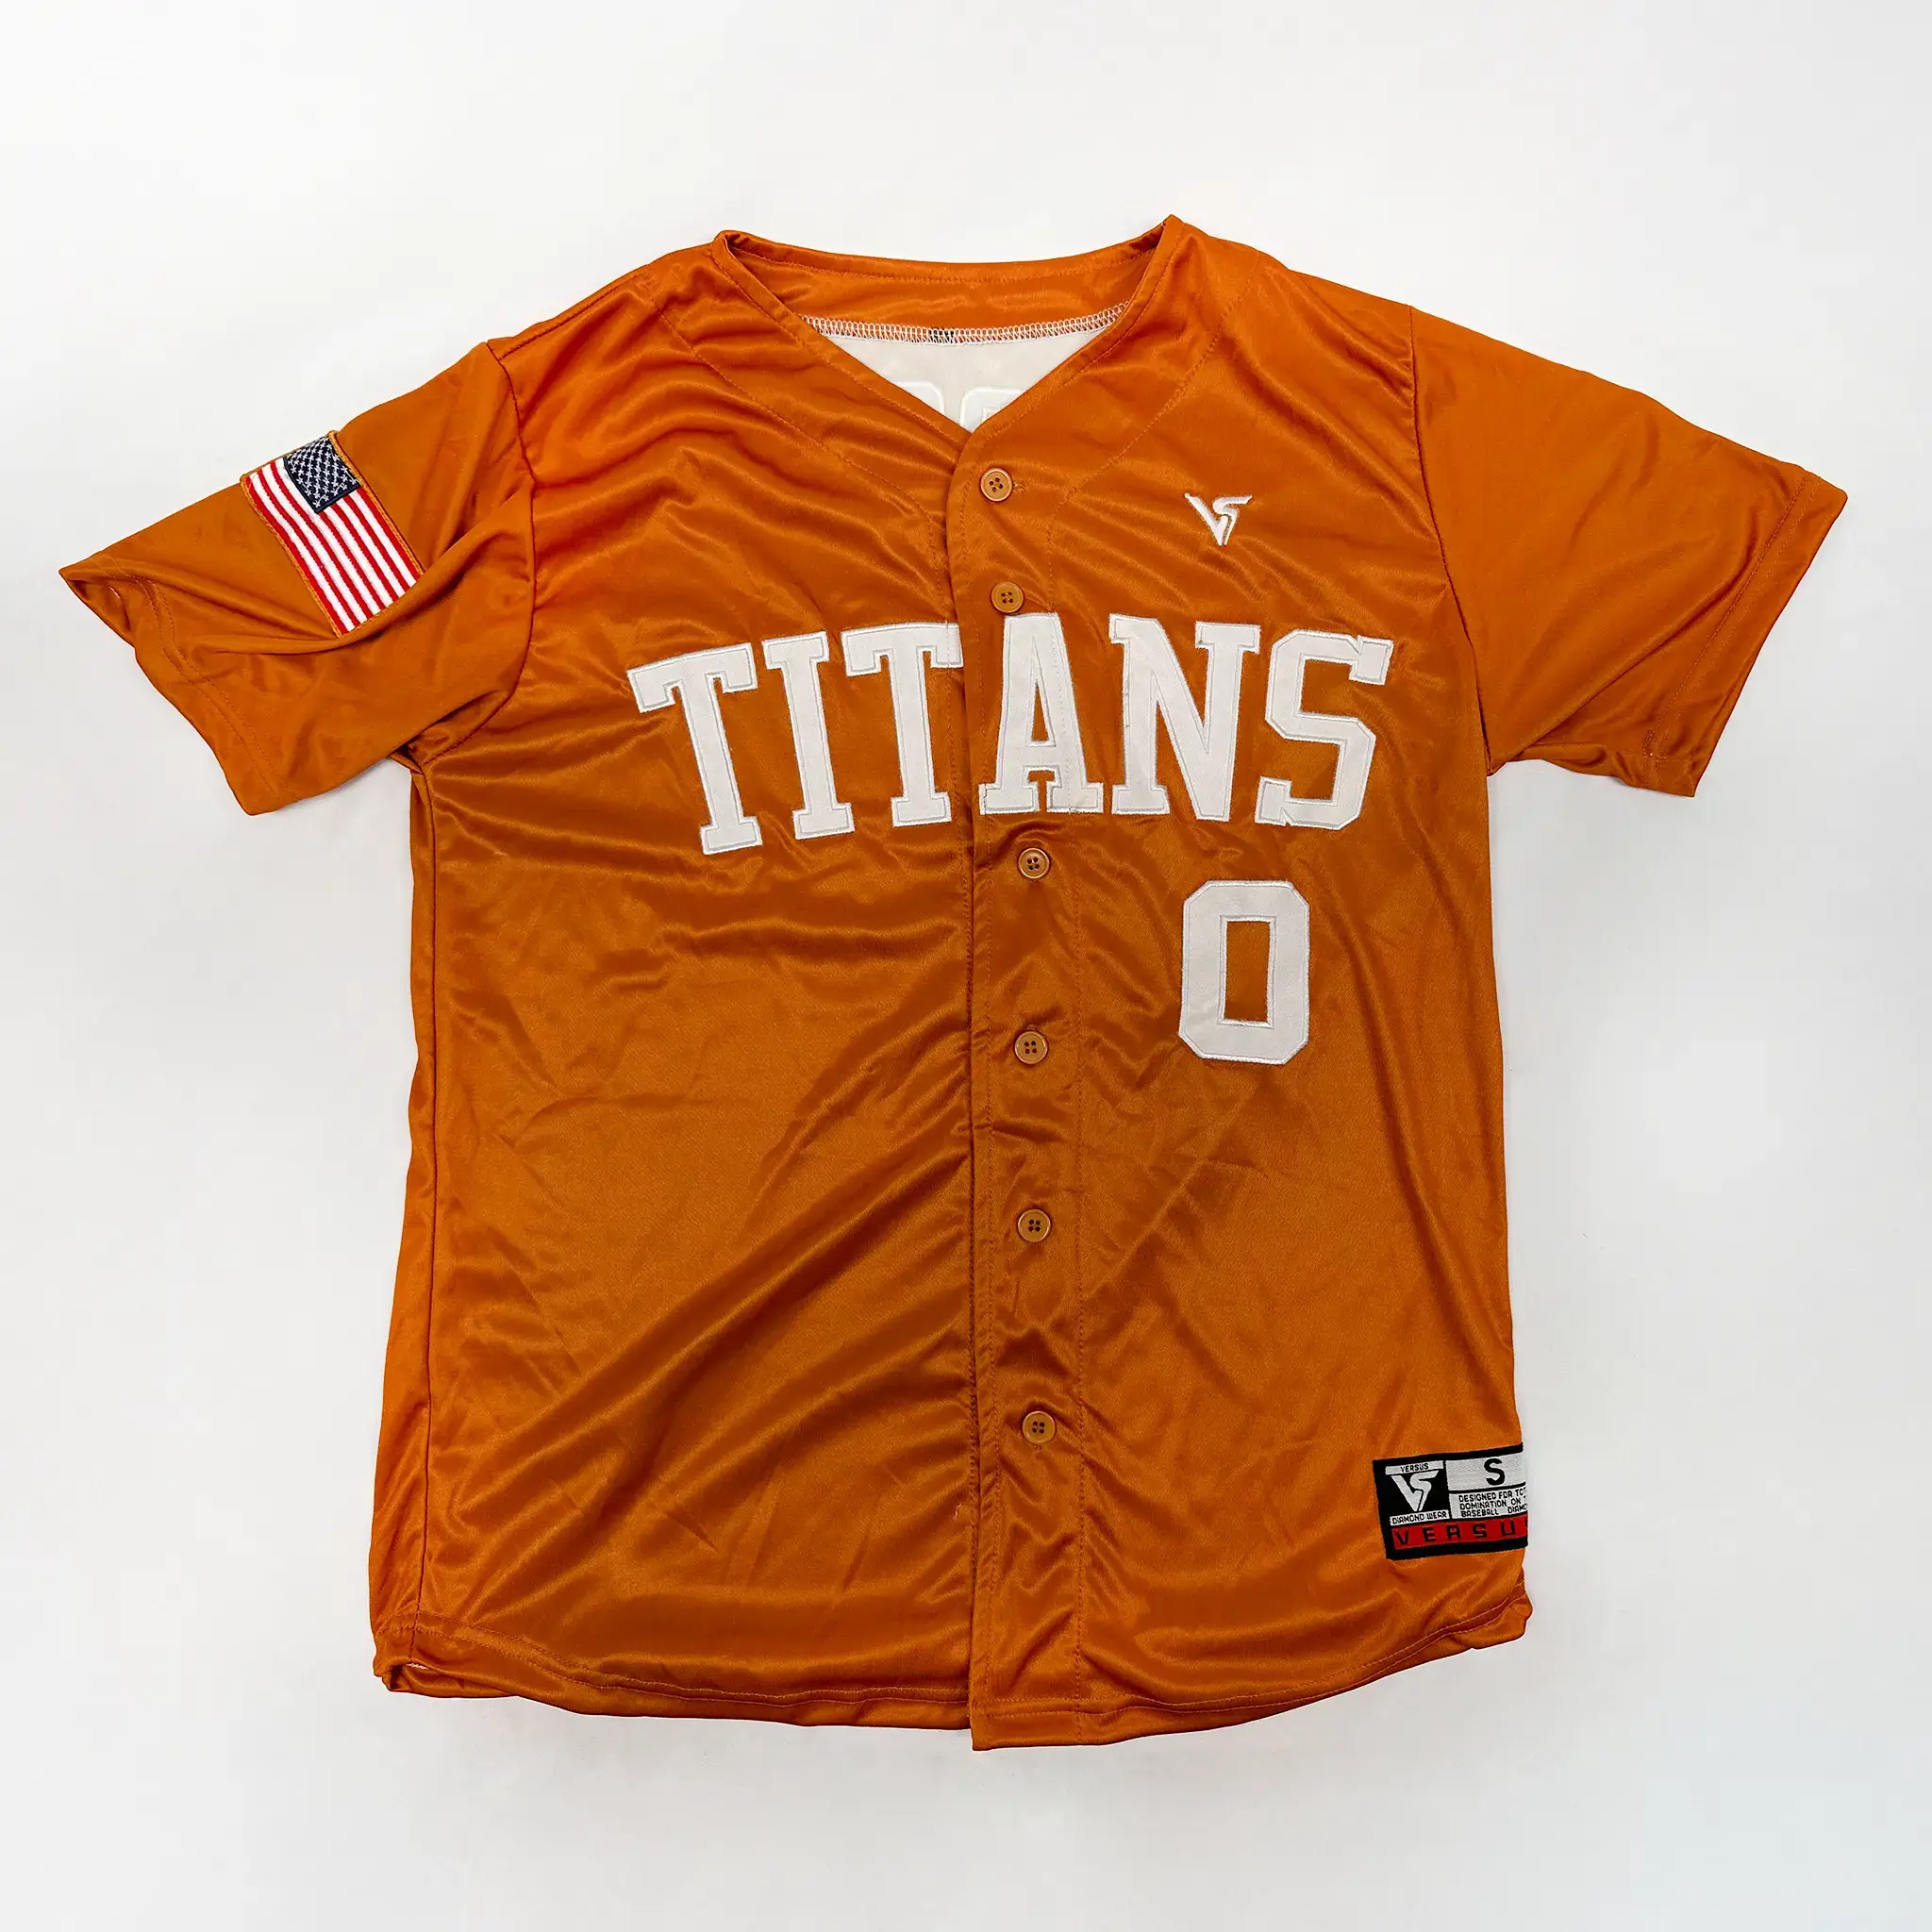 Orange Titans Baseball Uniform